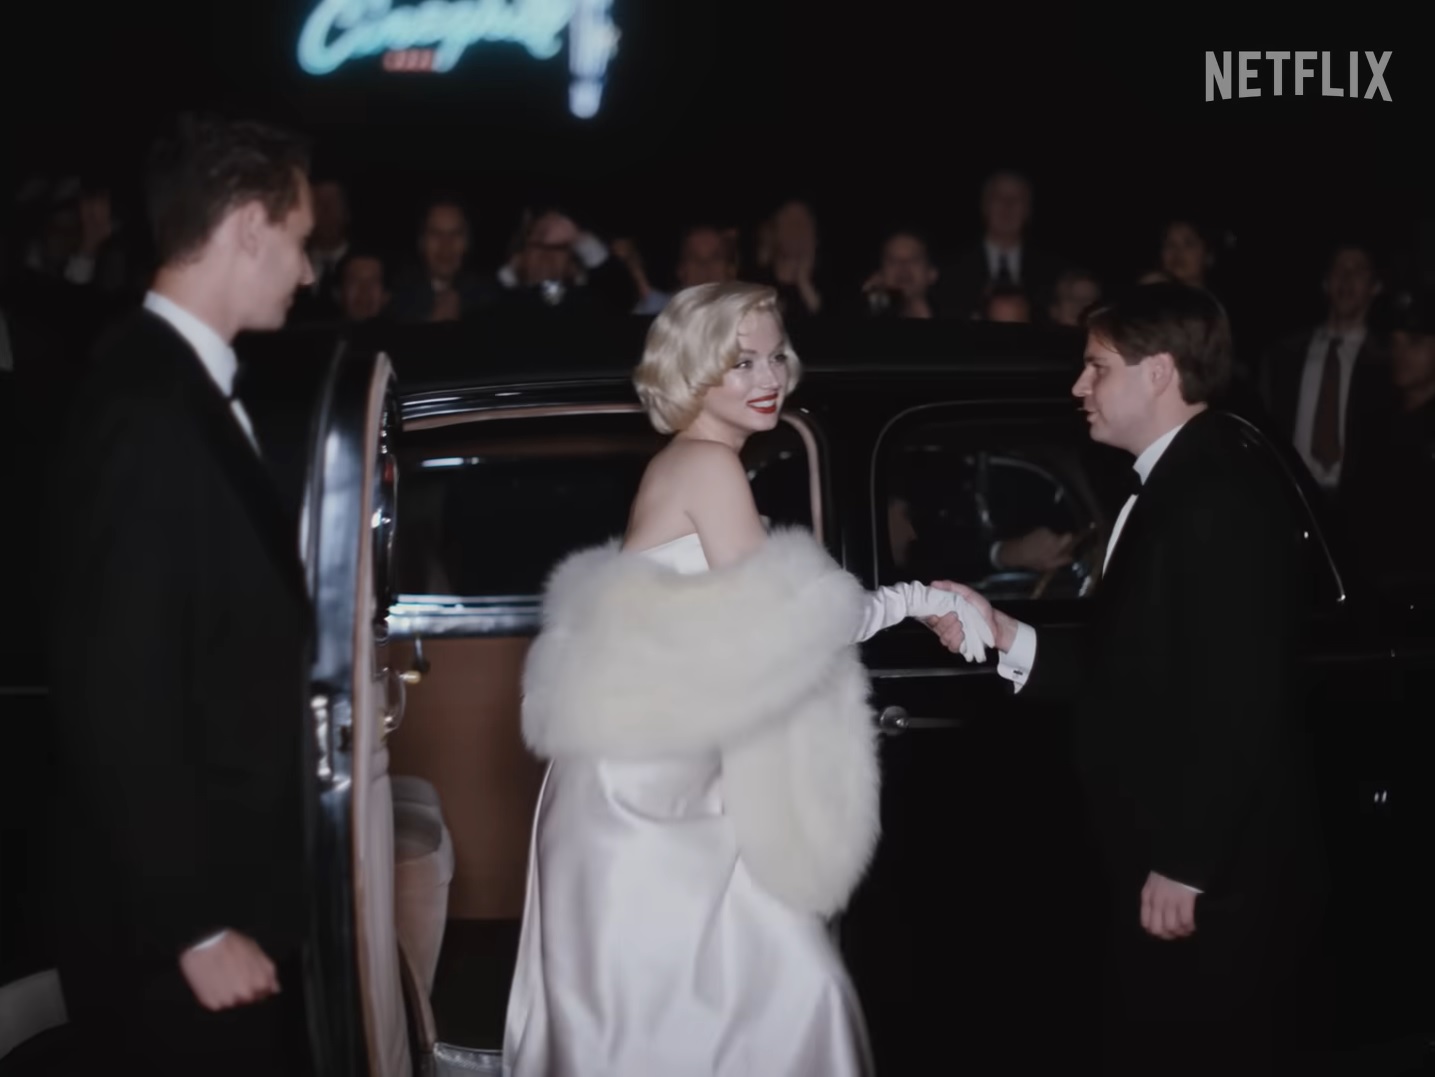 Blonde: the next Netflix movie that has Ana de Armas as Marilyn Monroe